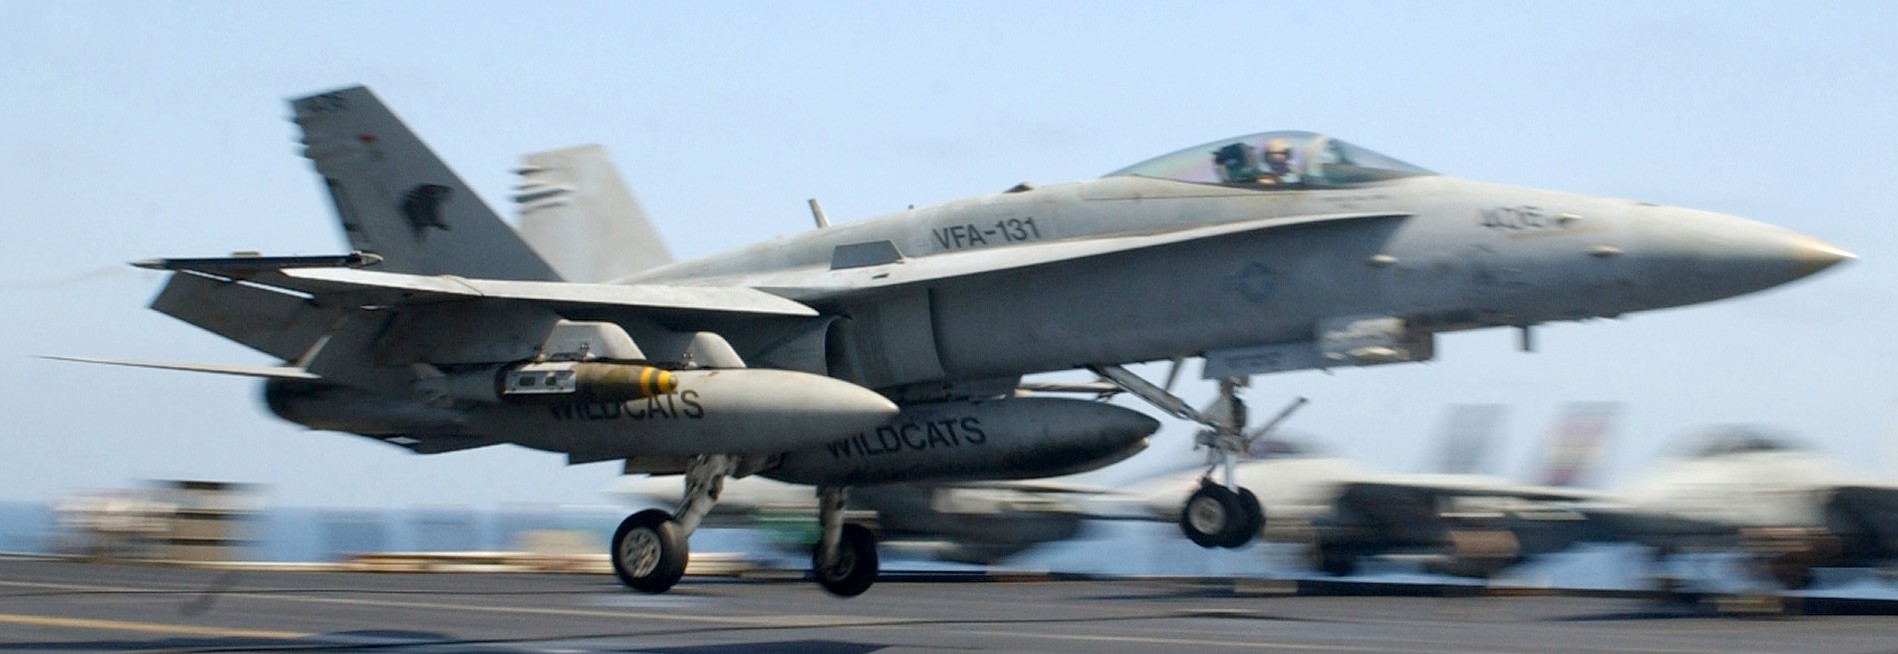 vfa-131 wildcats strike fighter squadron f/a-18c hornet cvw-7 uss john f. kennedy cv-67 2002 111